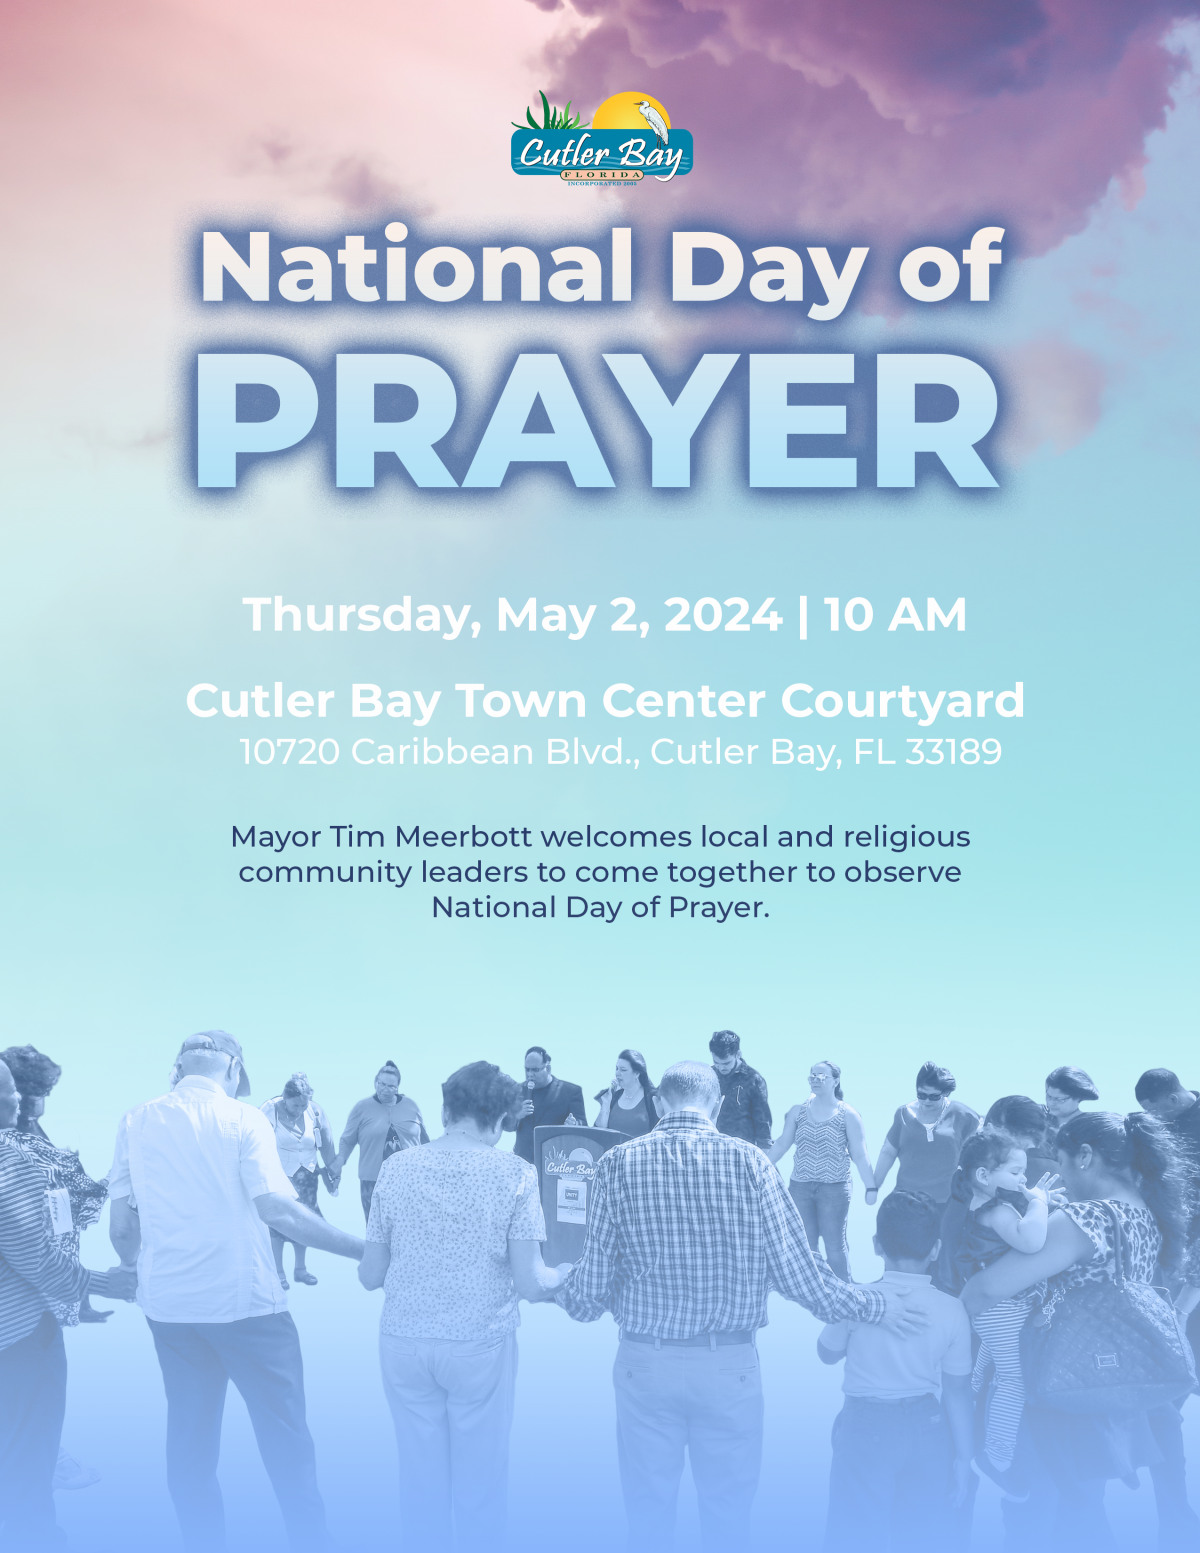 Cutler Bay National Day of Prayer 2024